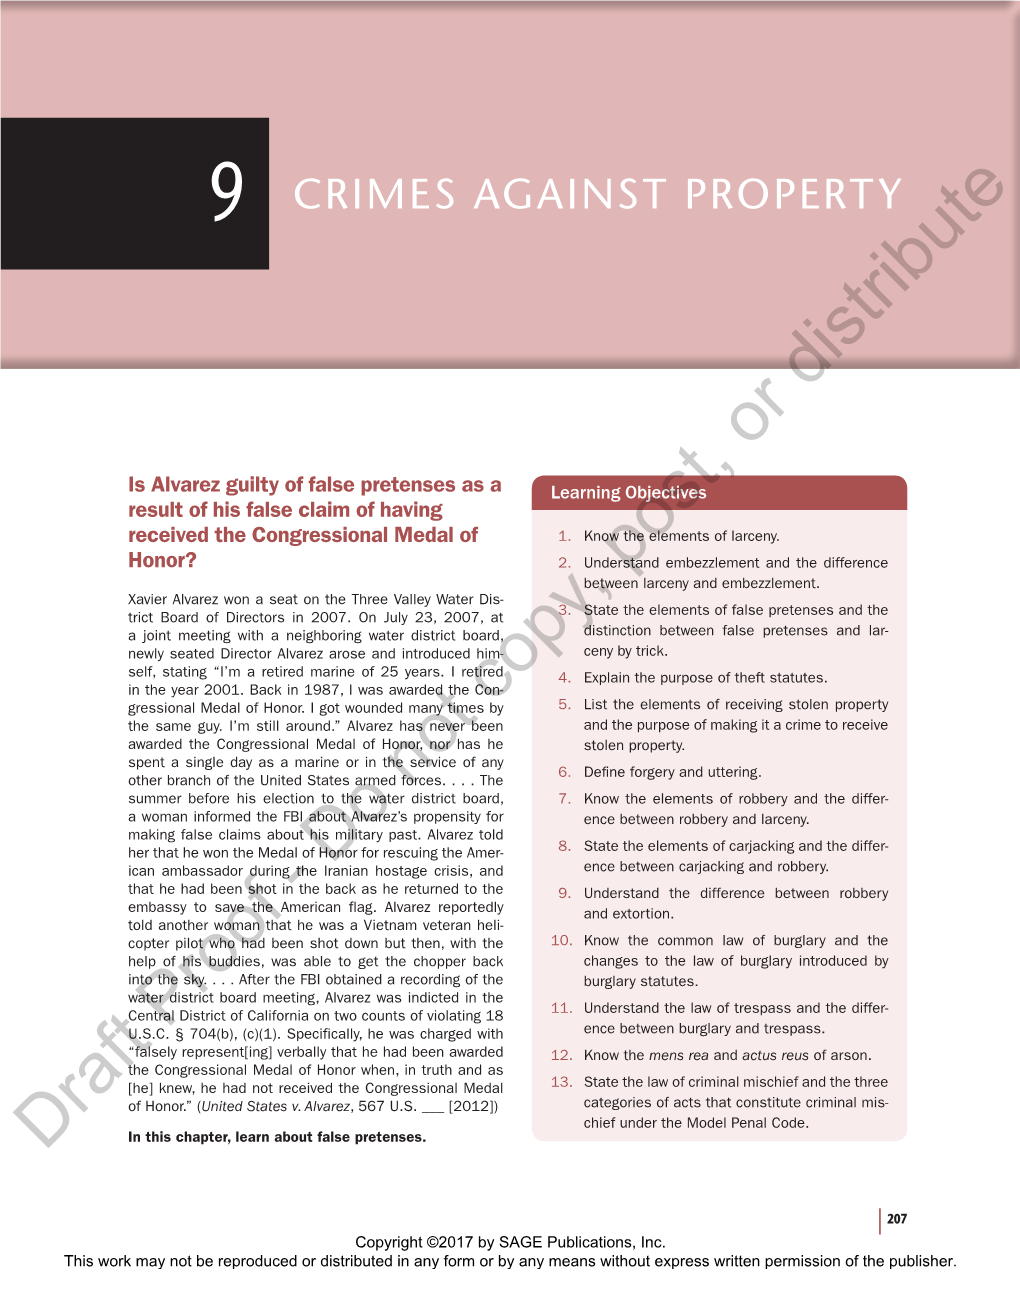 Crimes Against Property